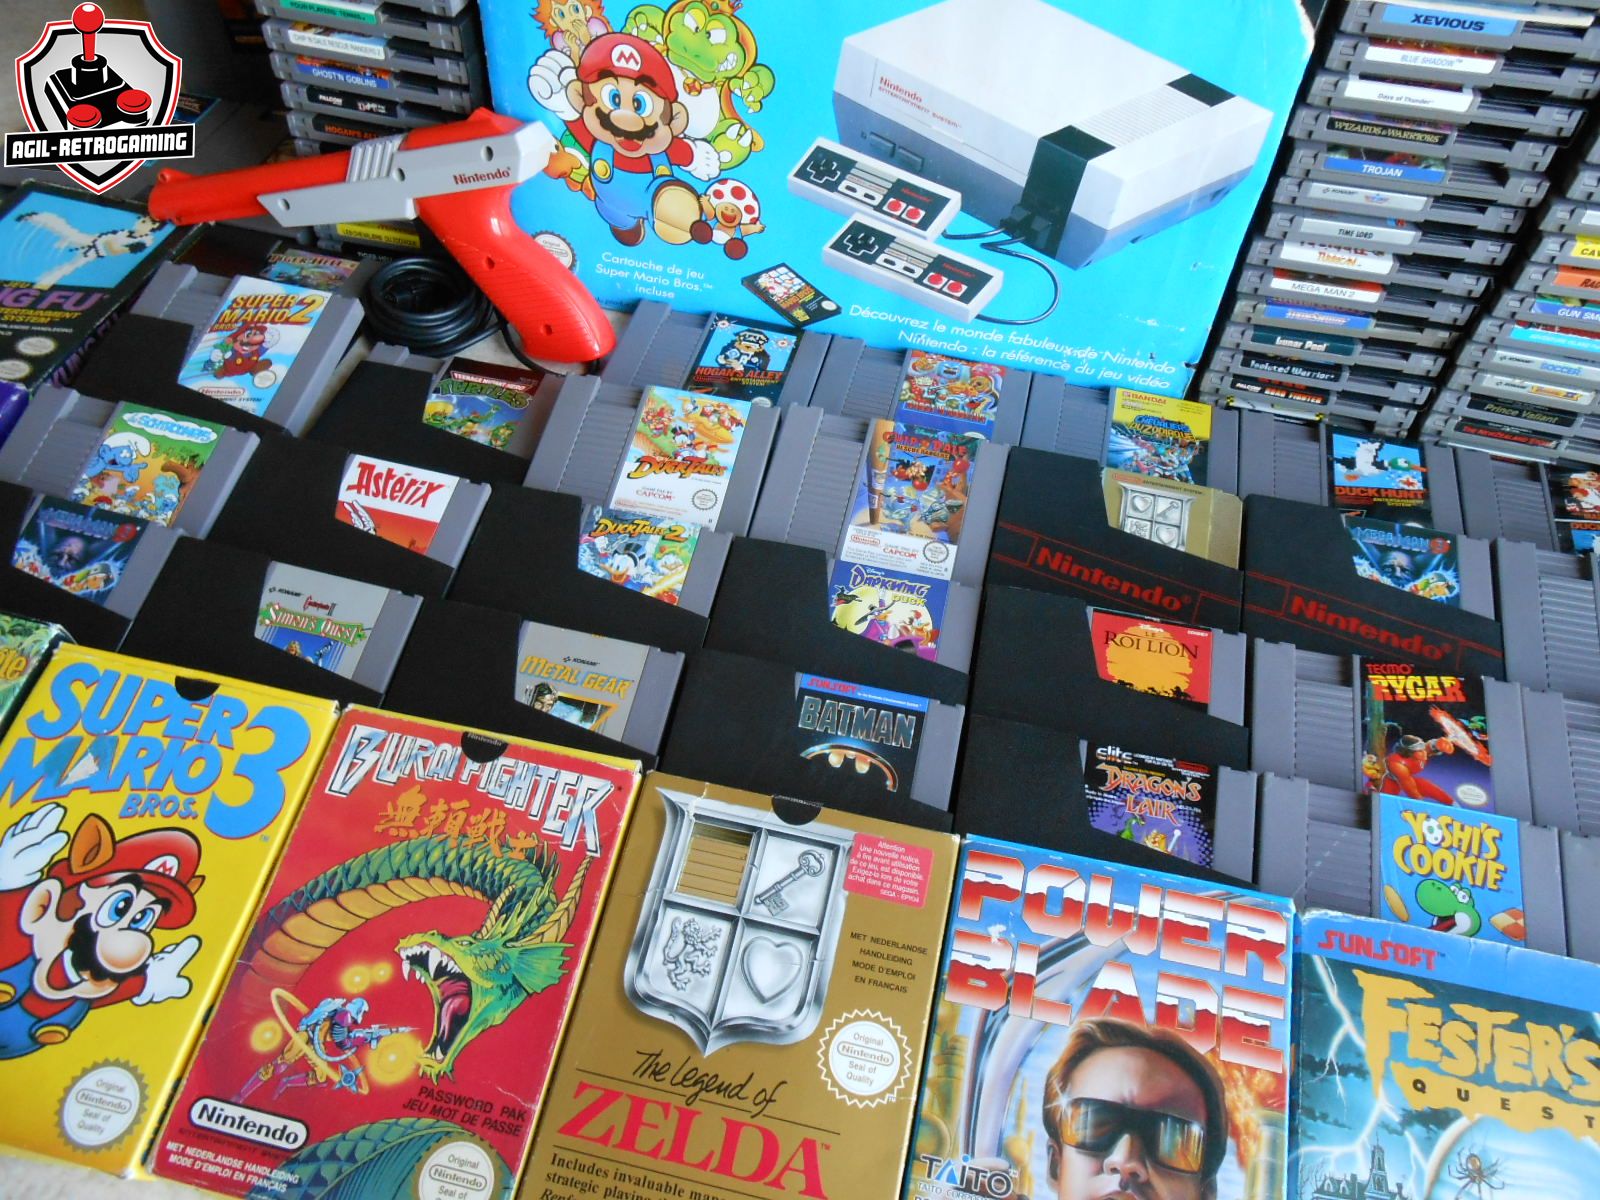 The Legend of Zelda NES, Super Mario Bros 3, Megaman